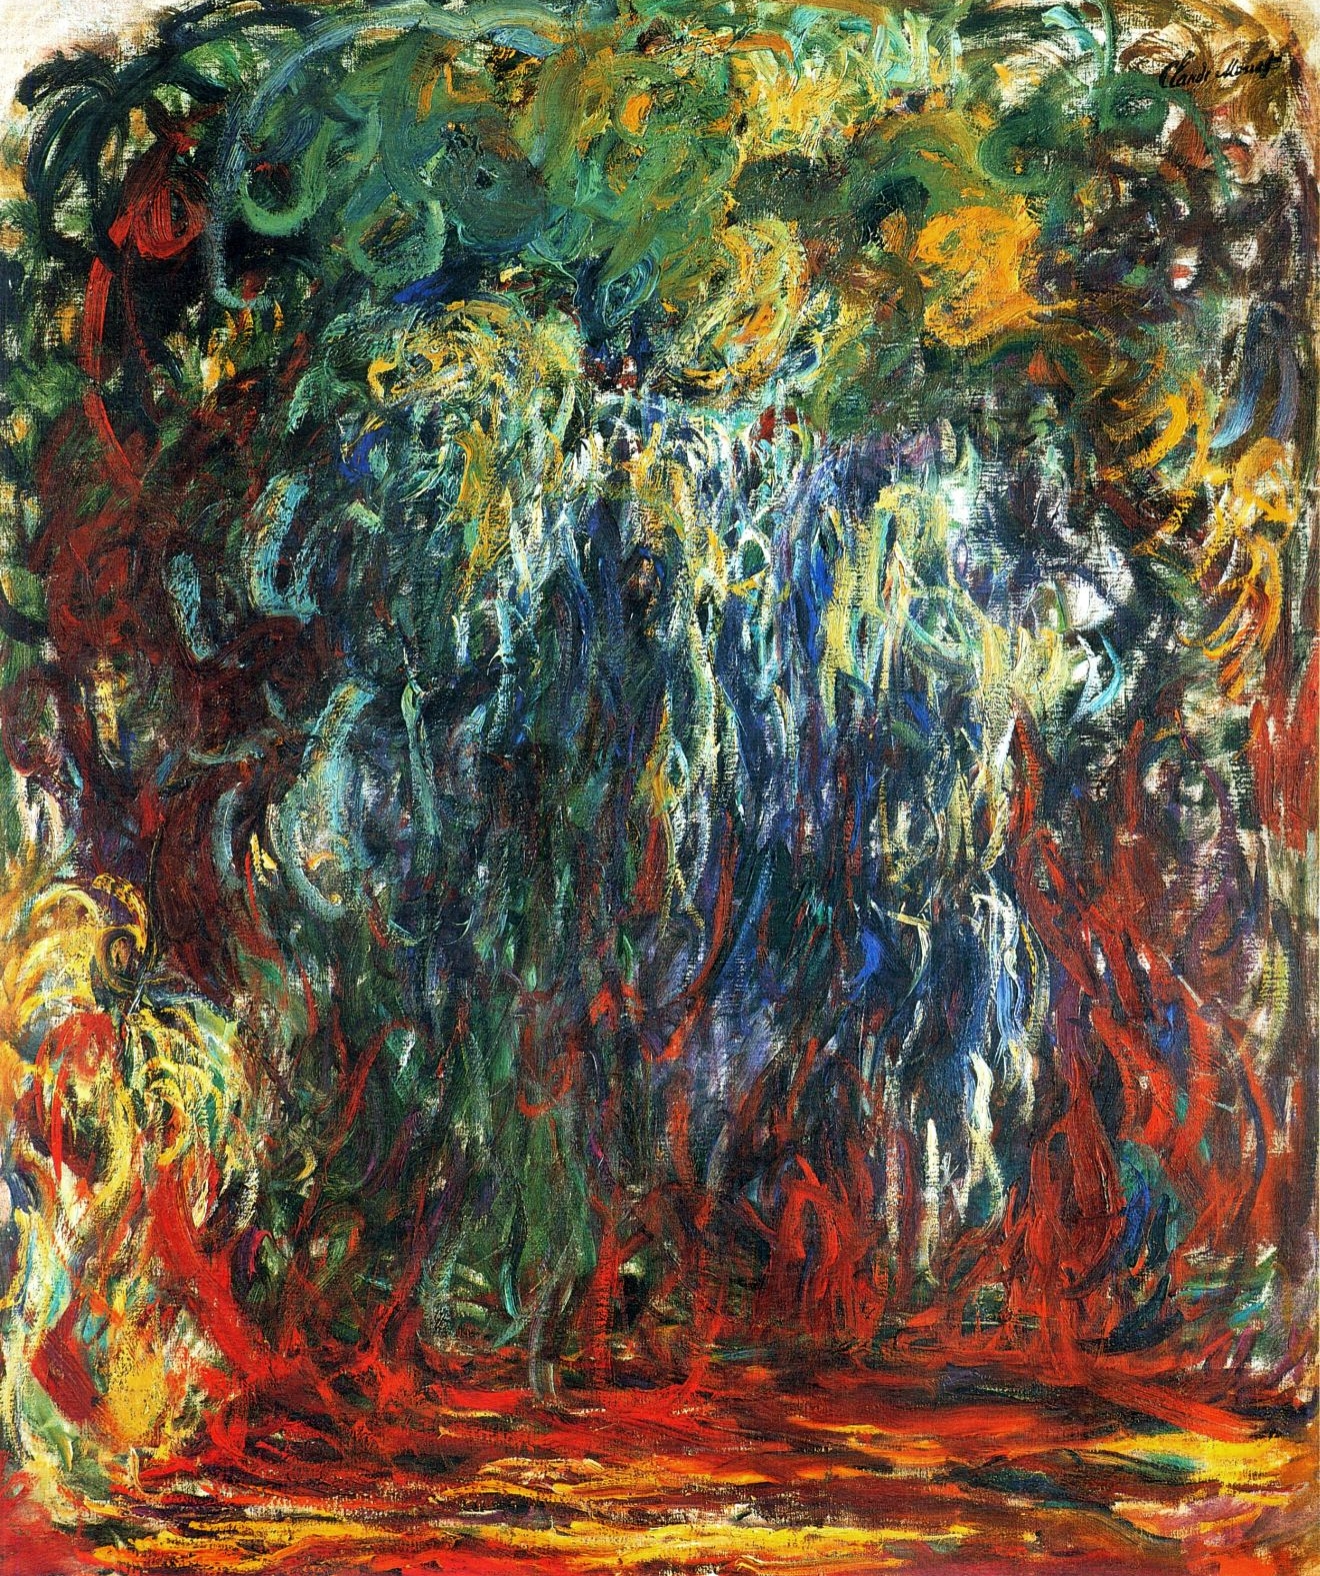 Claude+Monet-1840-1926 (929).jpg